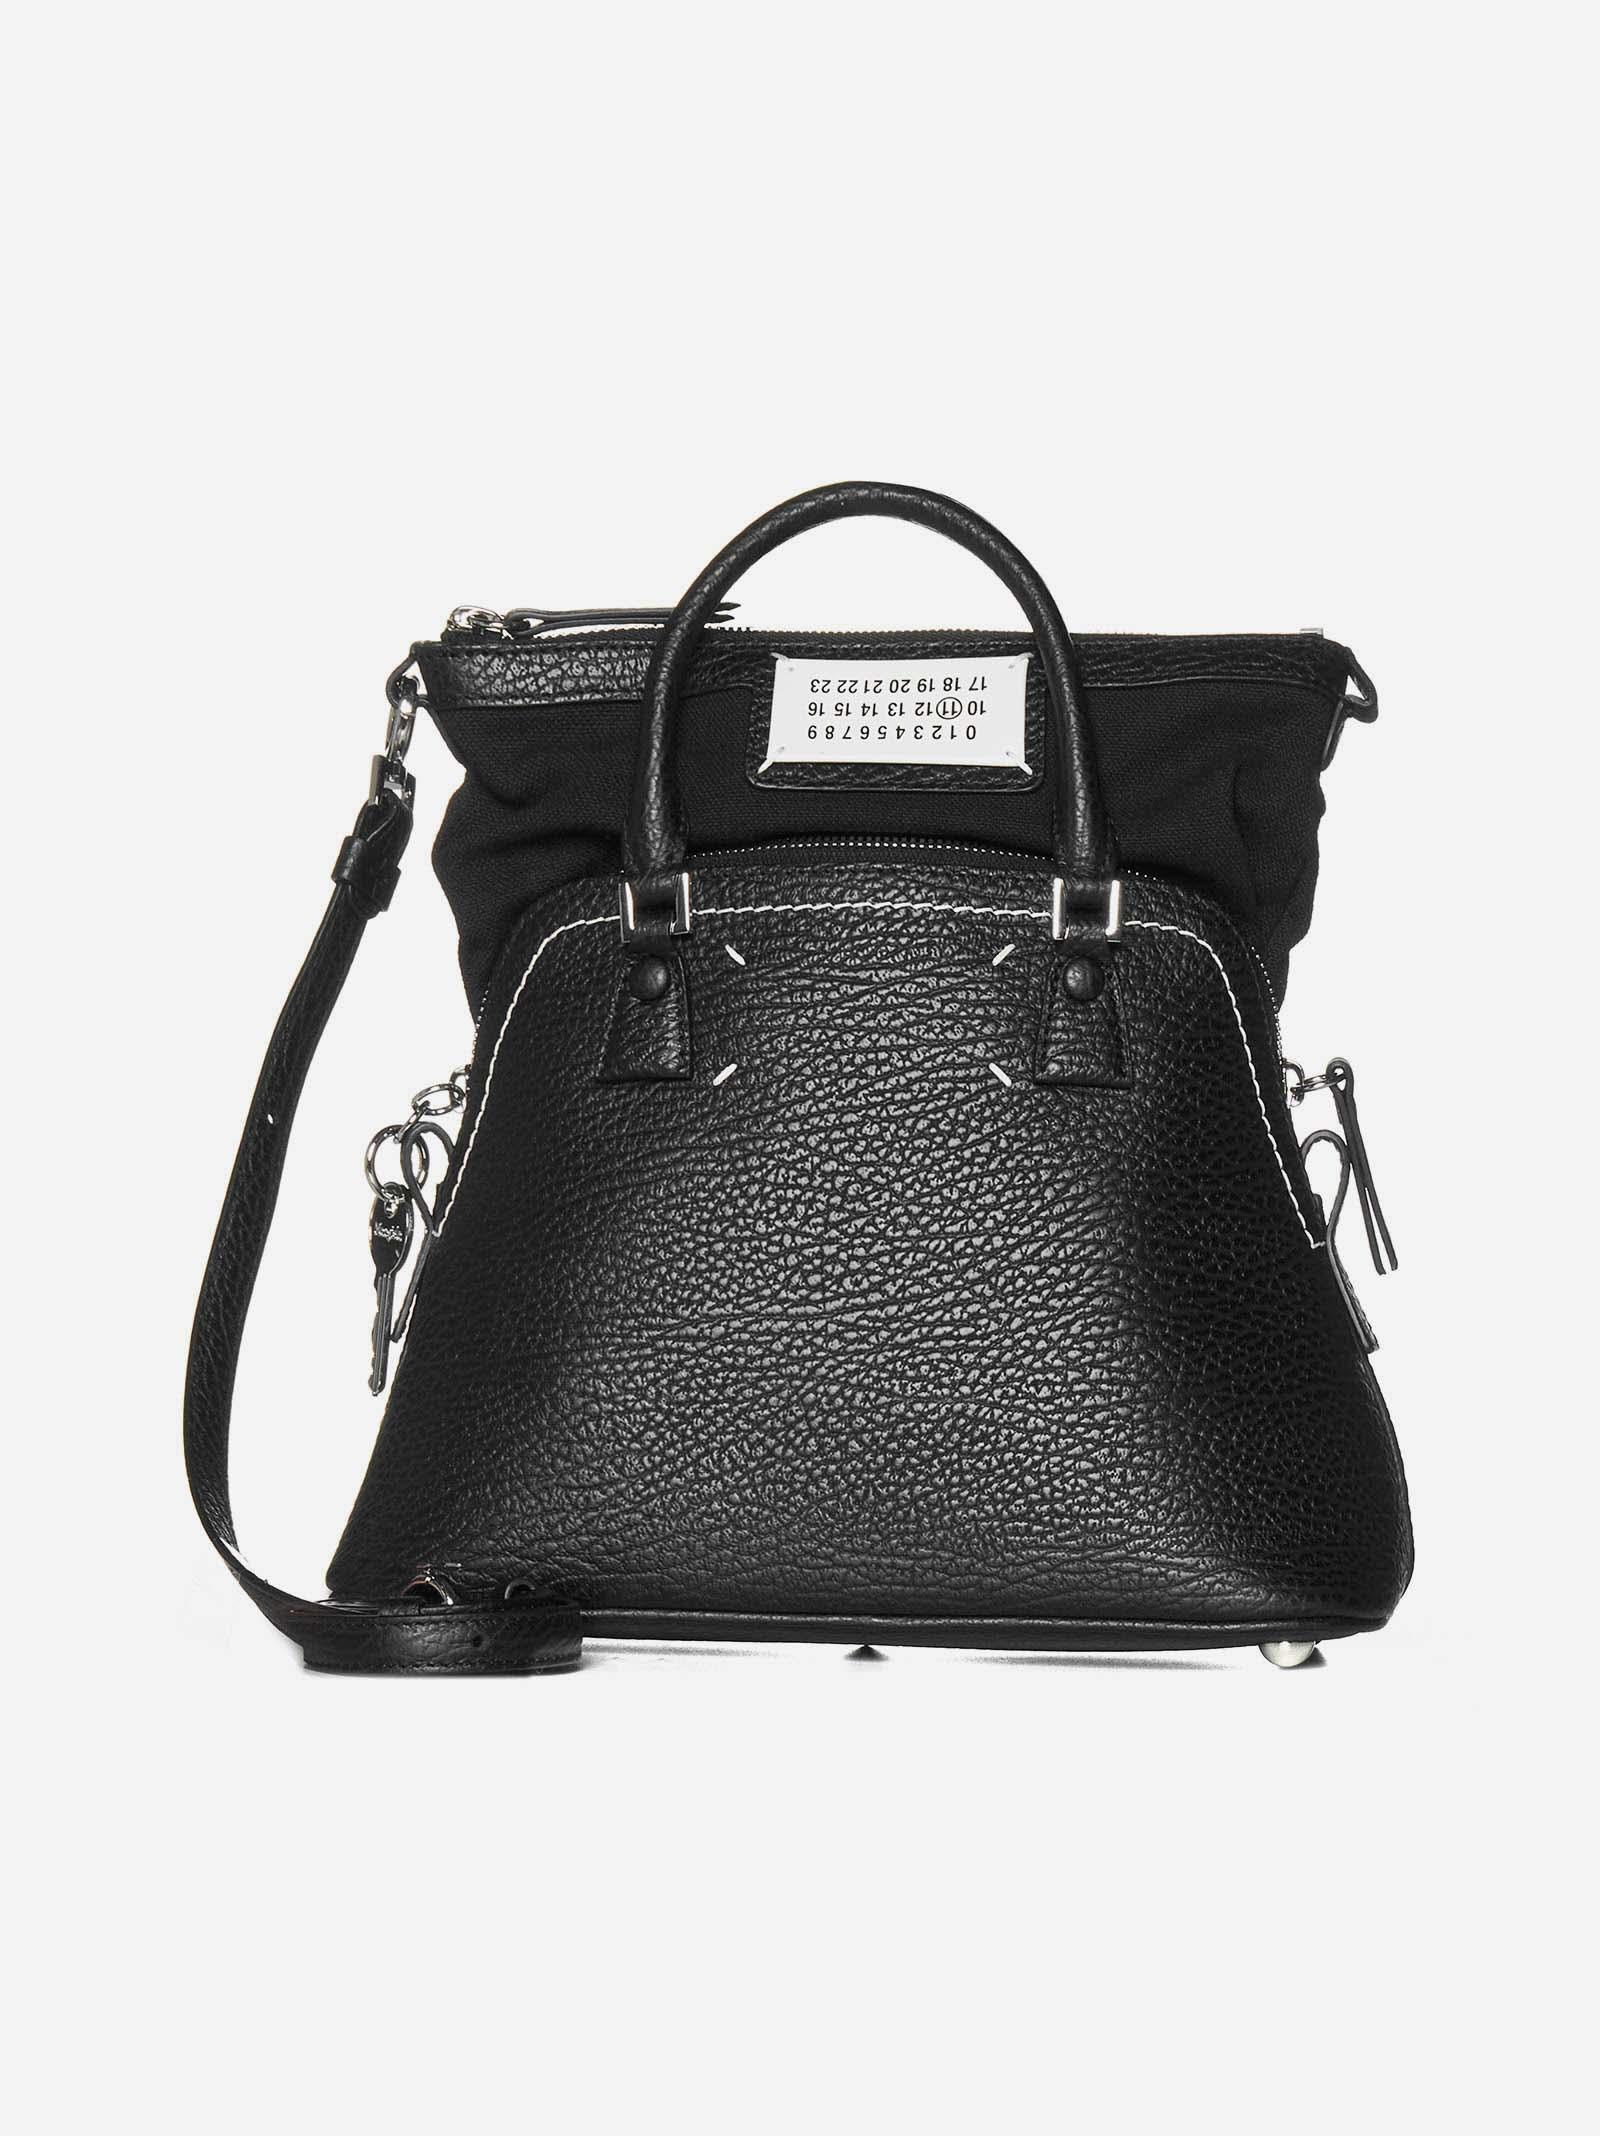 Maison Margiela 5ac Mini Black Leather Bag | Lyst